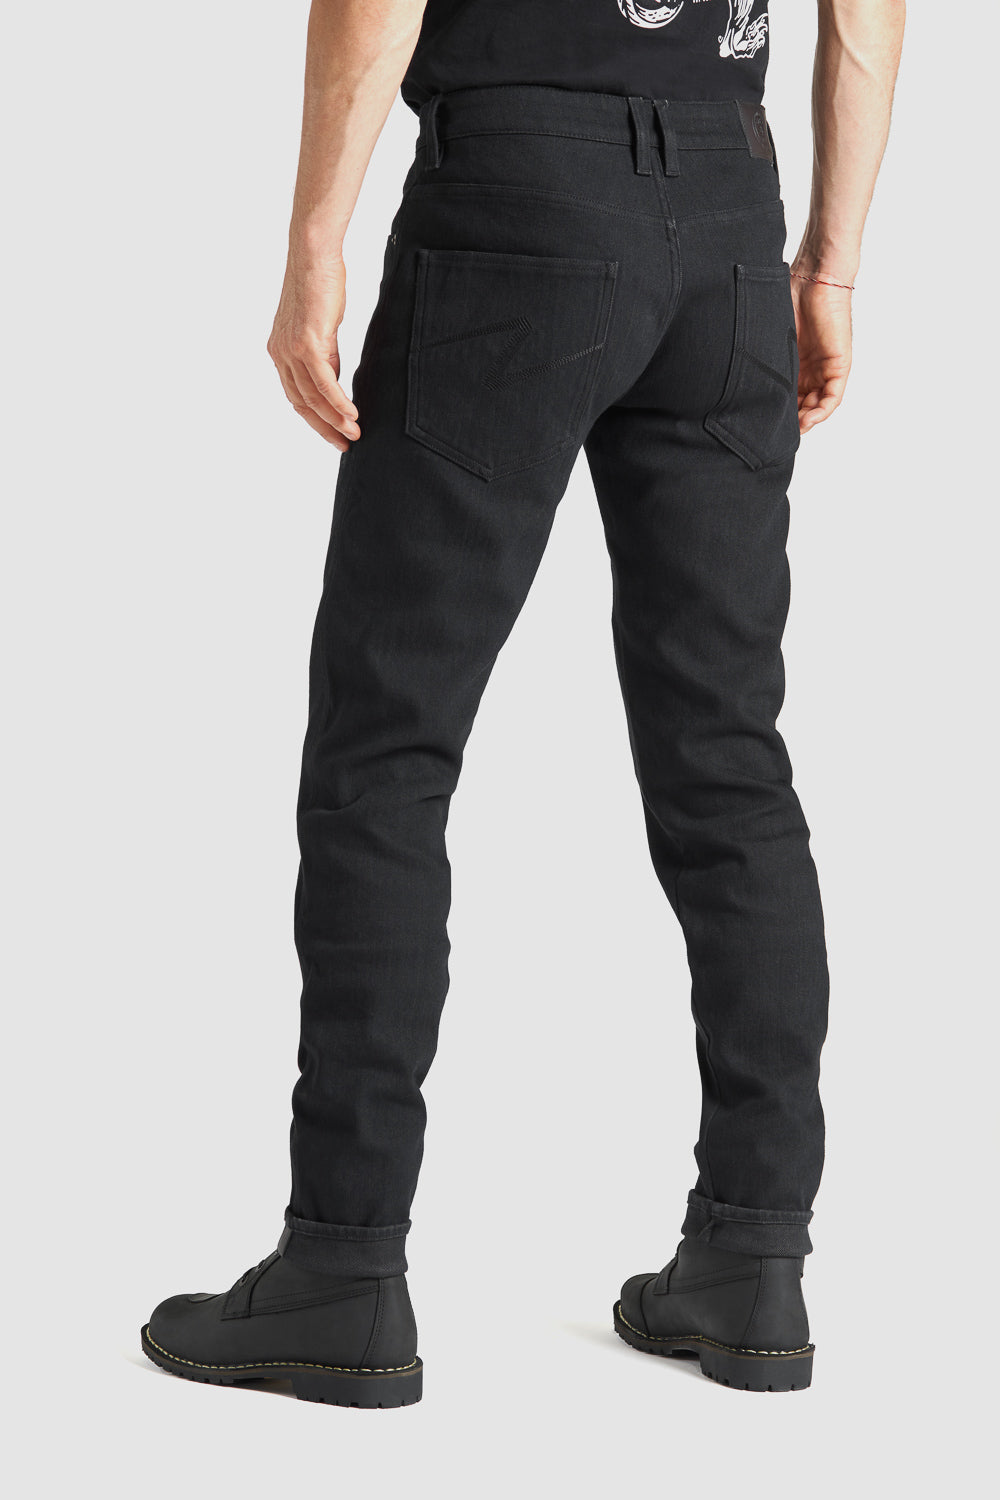 Pando Moto STEEL BLACK 02 Jeans